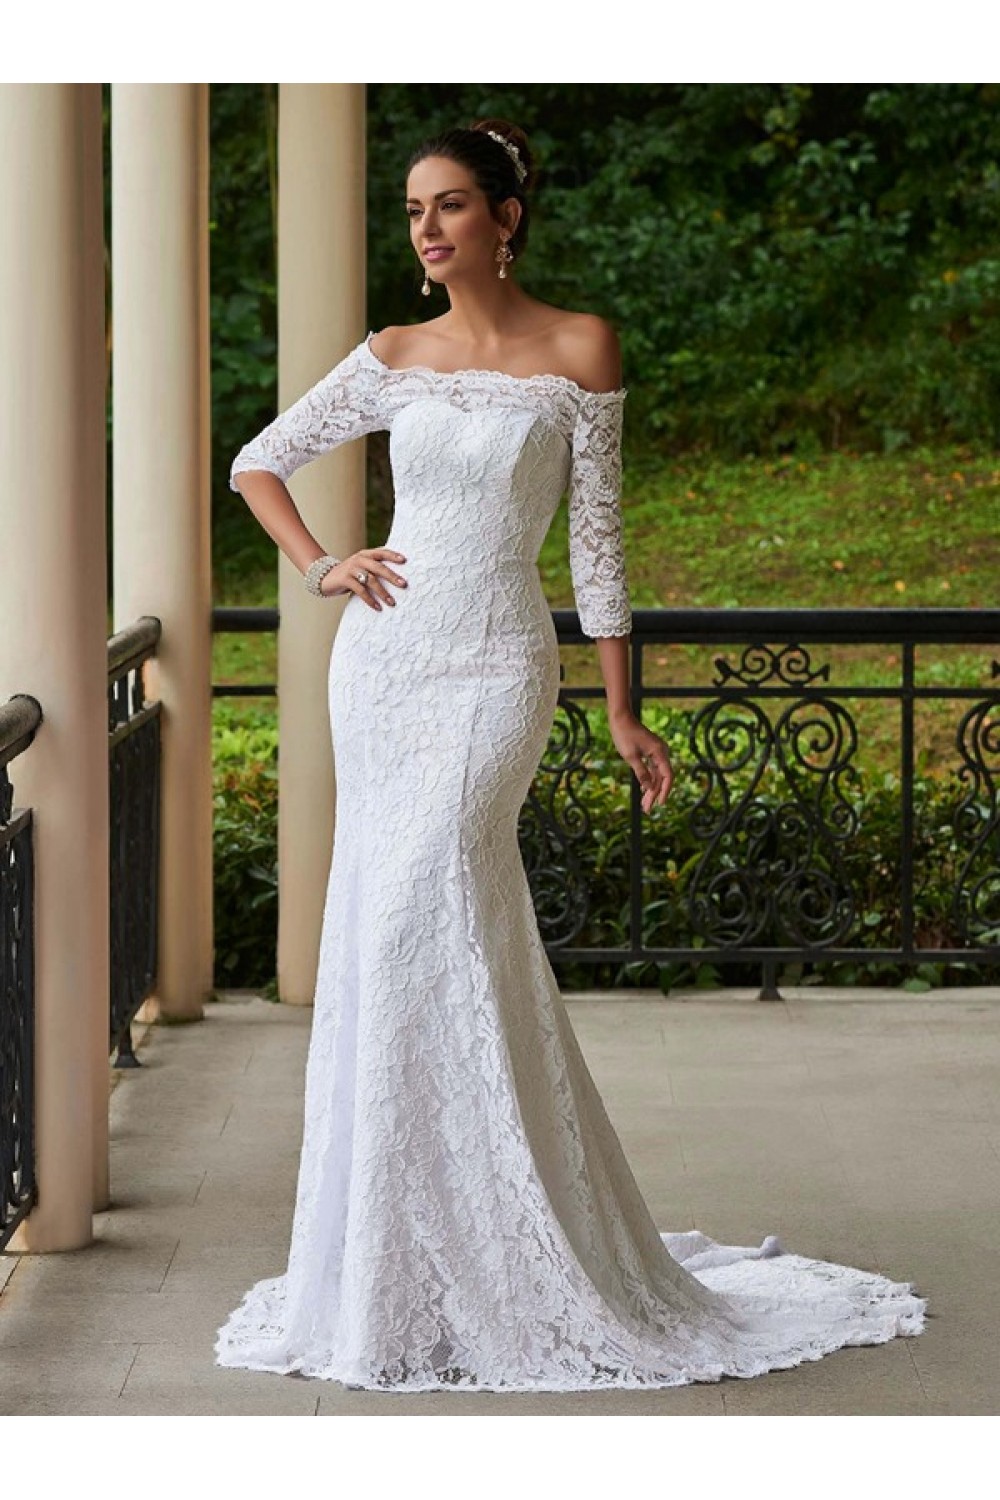 Mermaid 3/4 Length Sleeves Off-the-Shoulder Lace Wedding Dresses Bridal